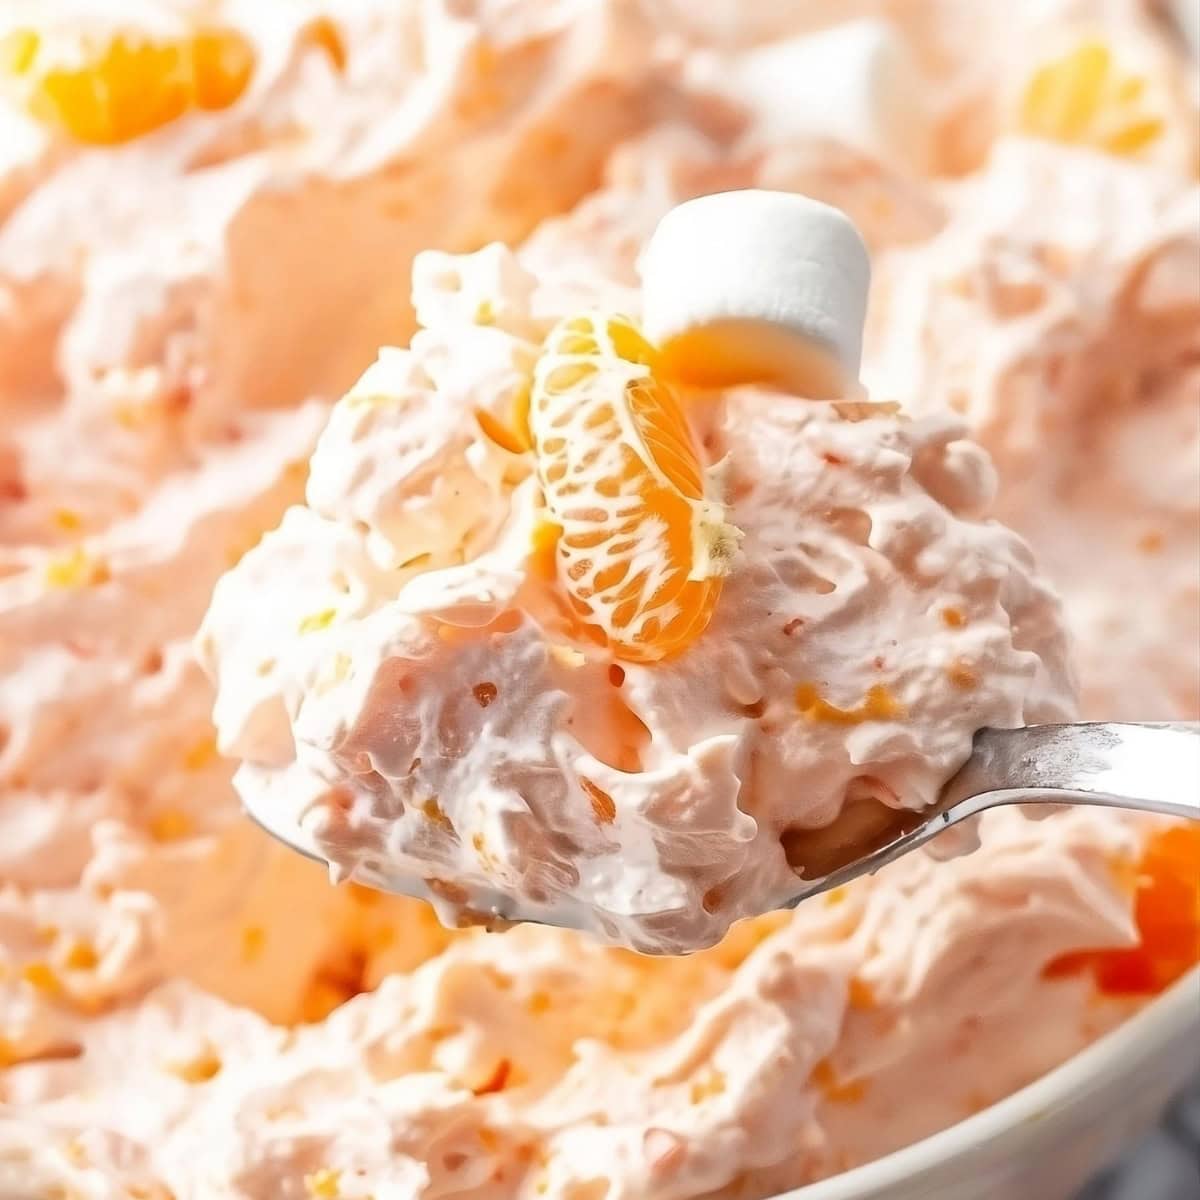 Spoonful of orange fluff salad garnished with marshmallow and fresh orange.